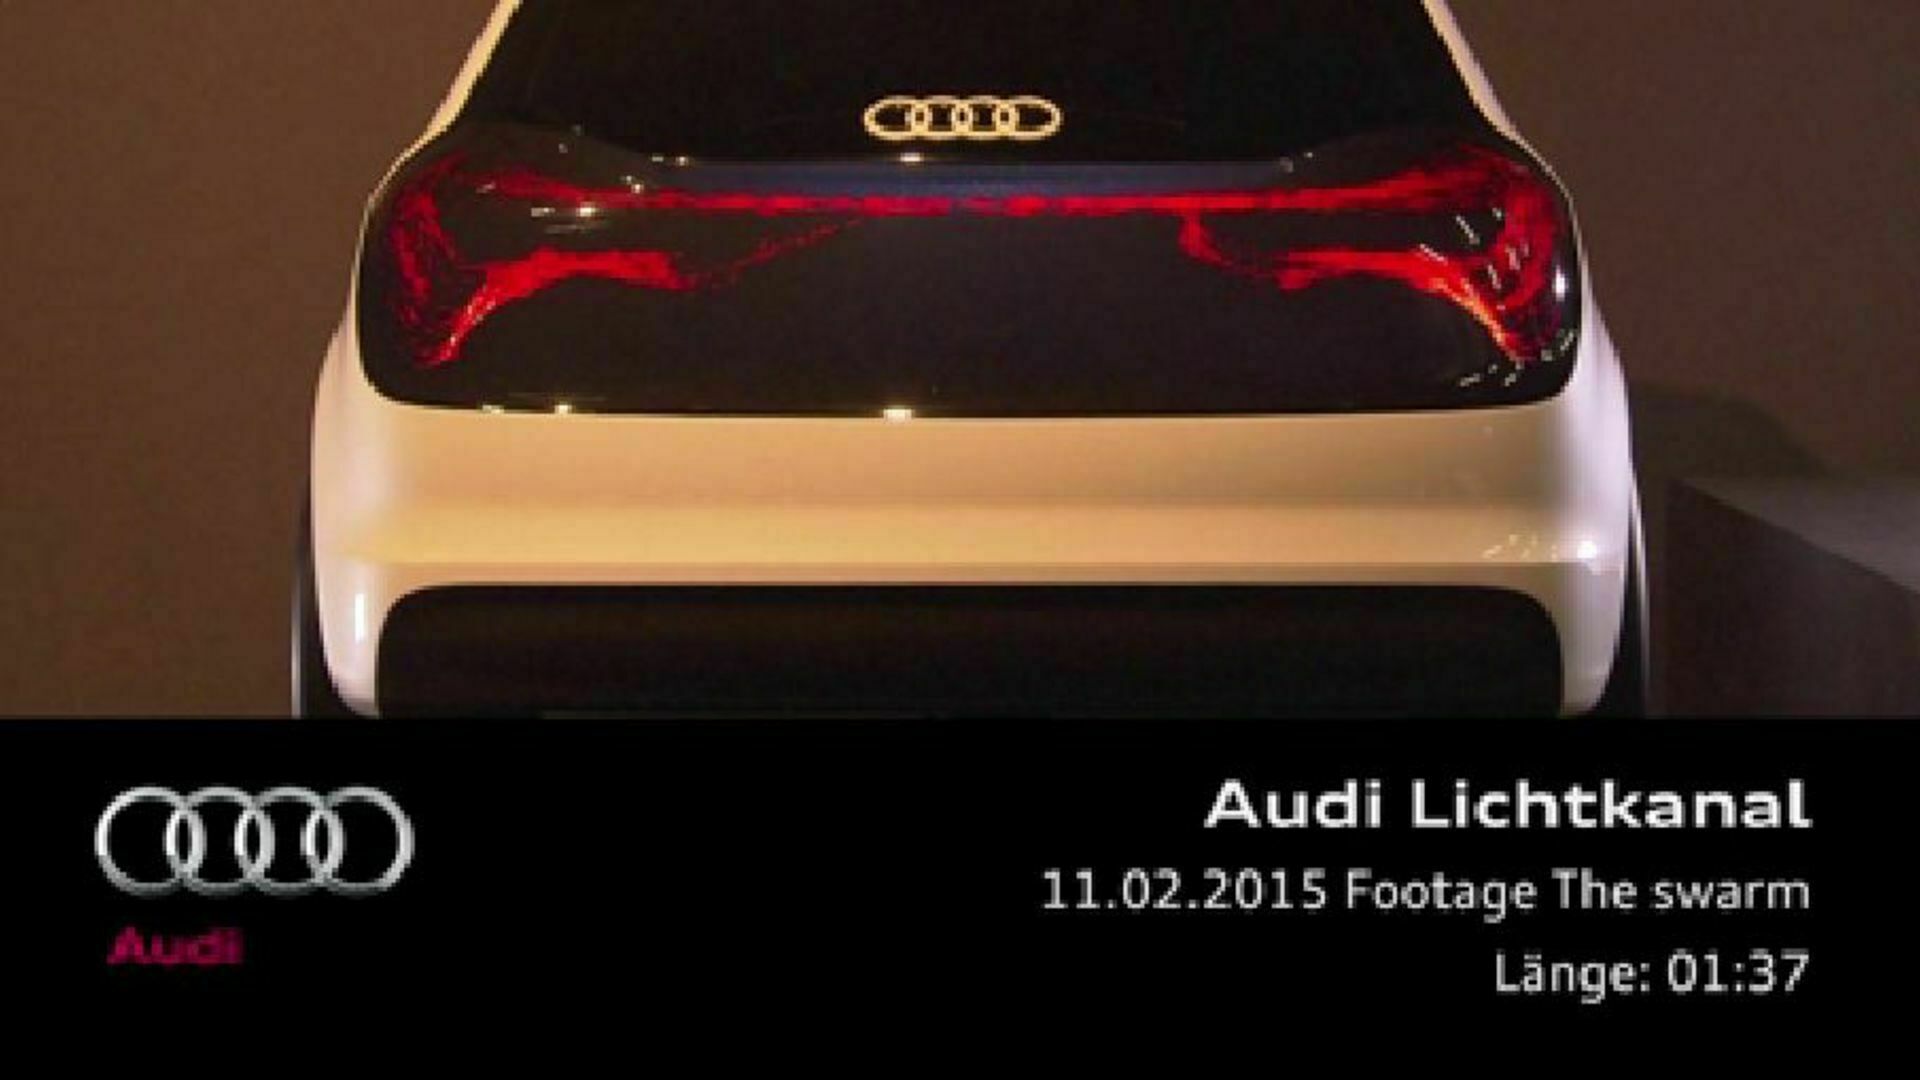 Audi future lab - Footage The Swarm